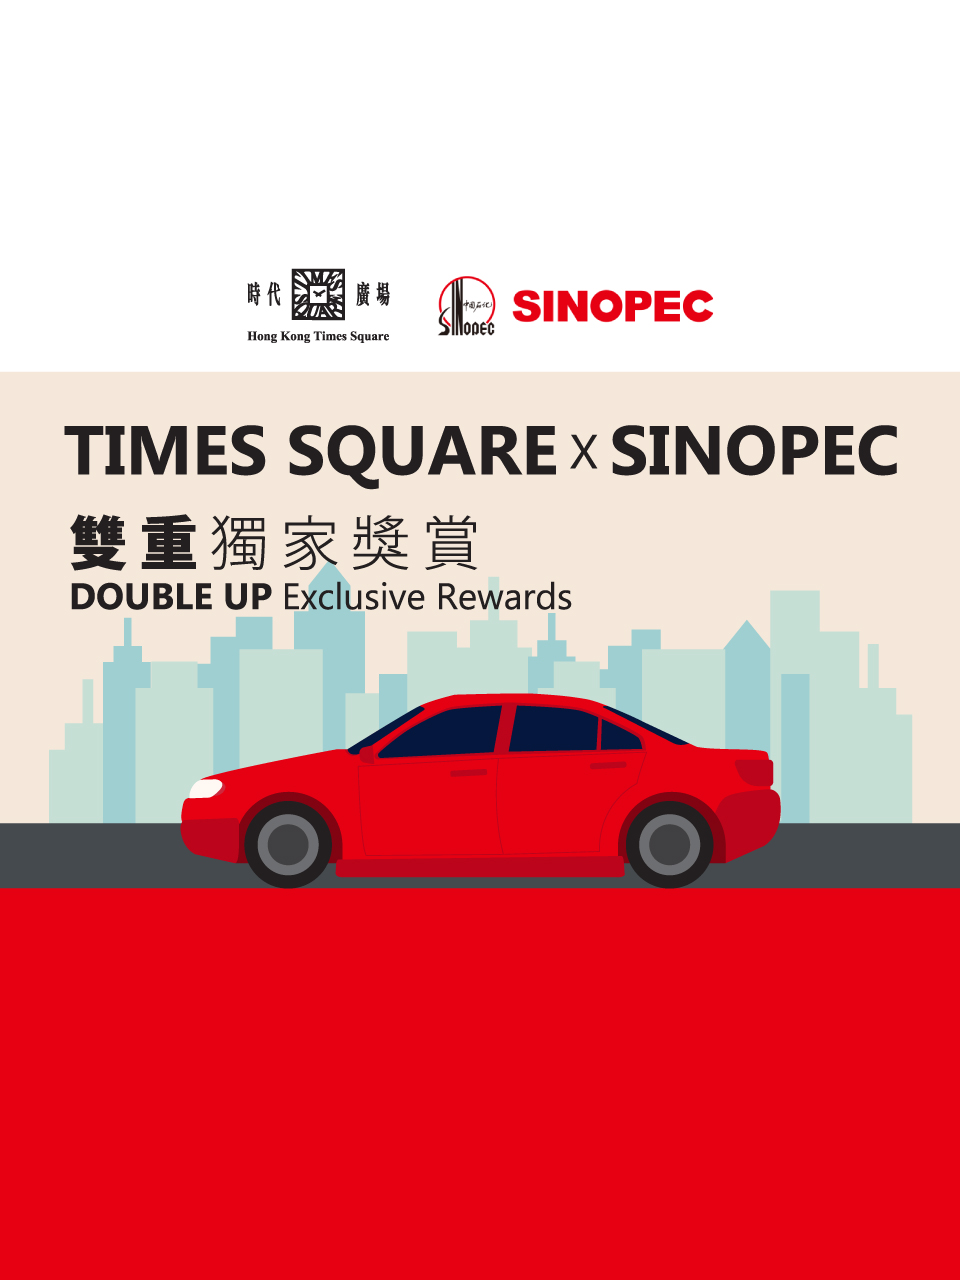 Times Square x SINOPEC双重独家奖赏